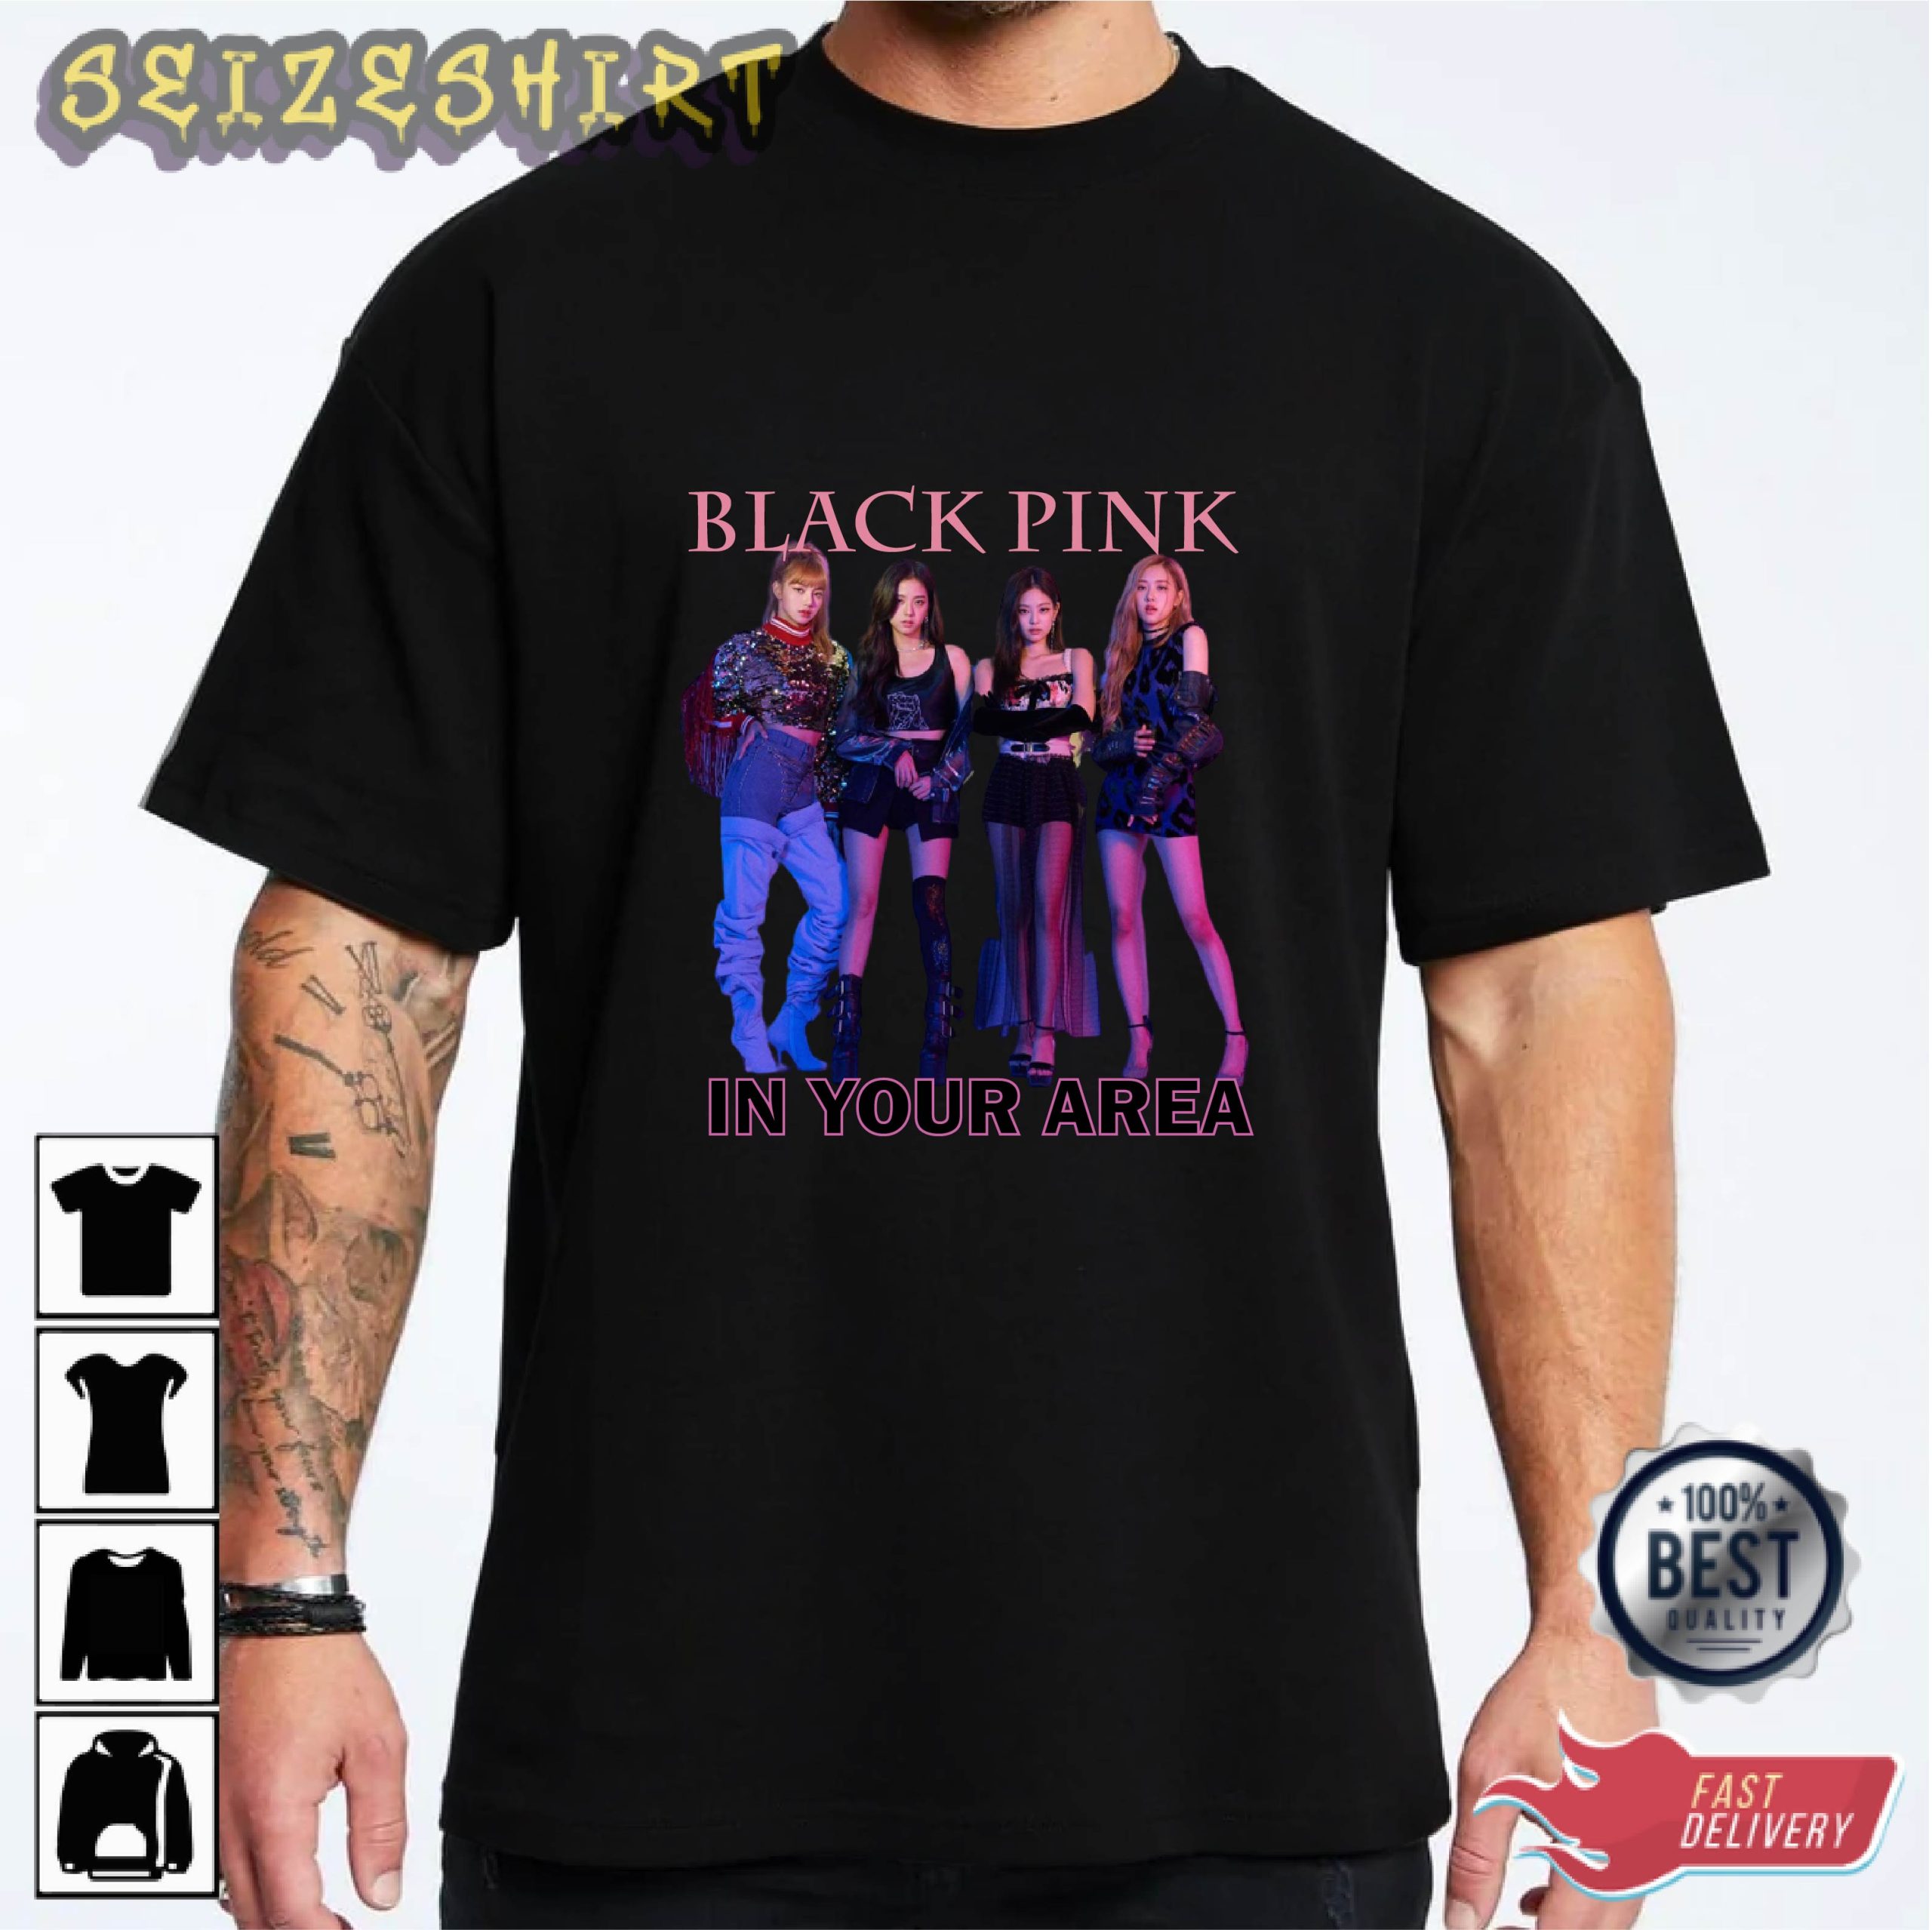 Blackpink In Your Area Best Tee Shirt Long Sleeve Shirt